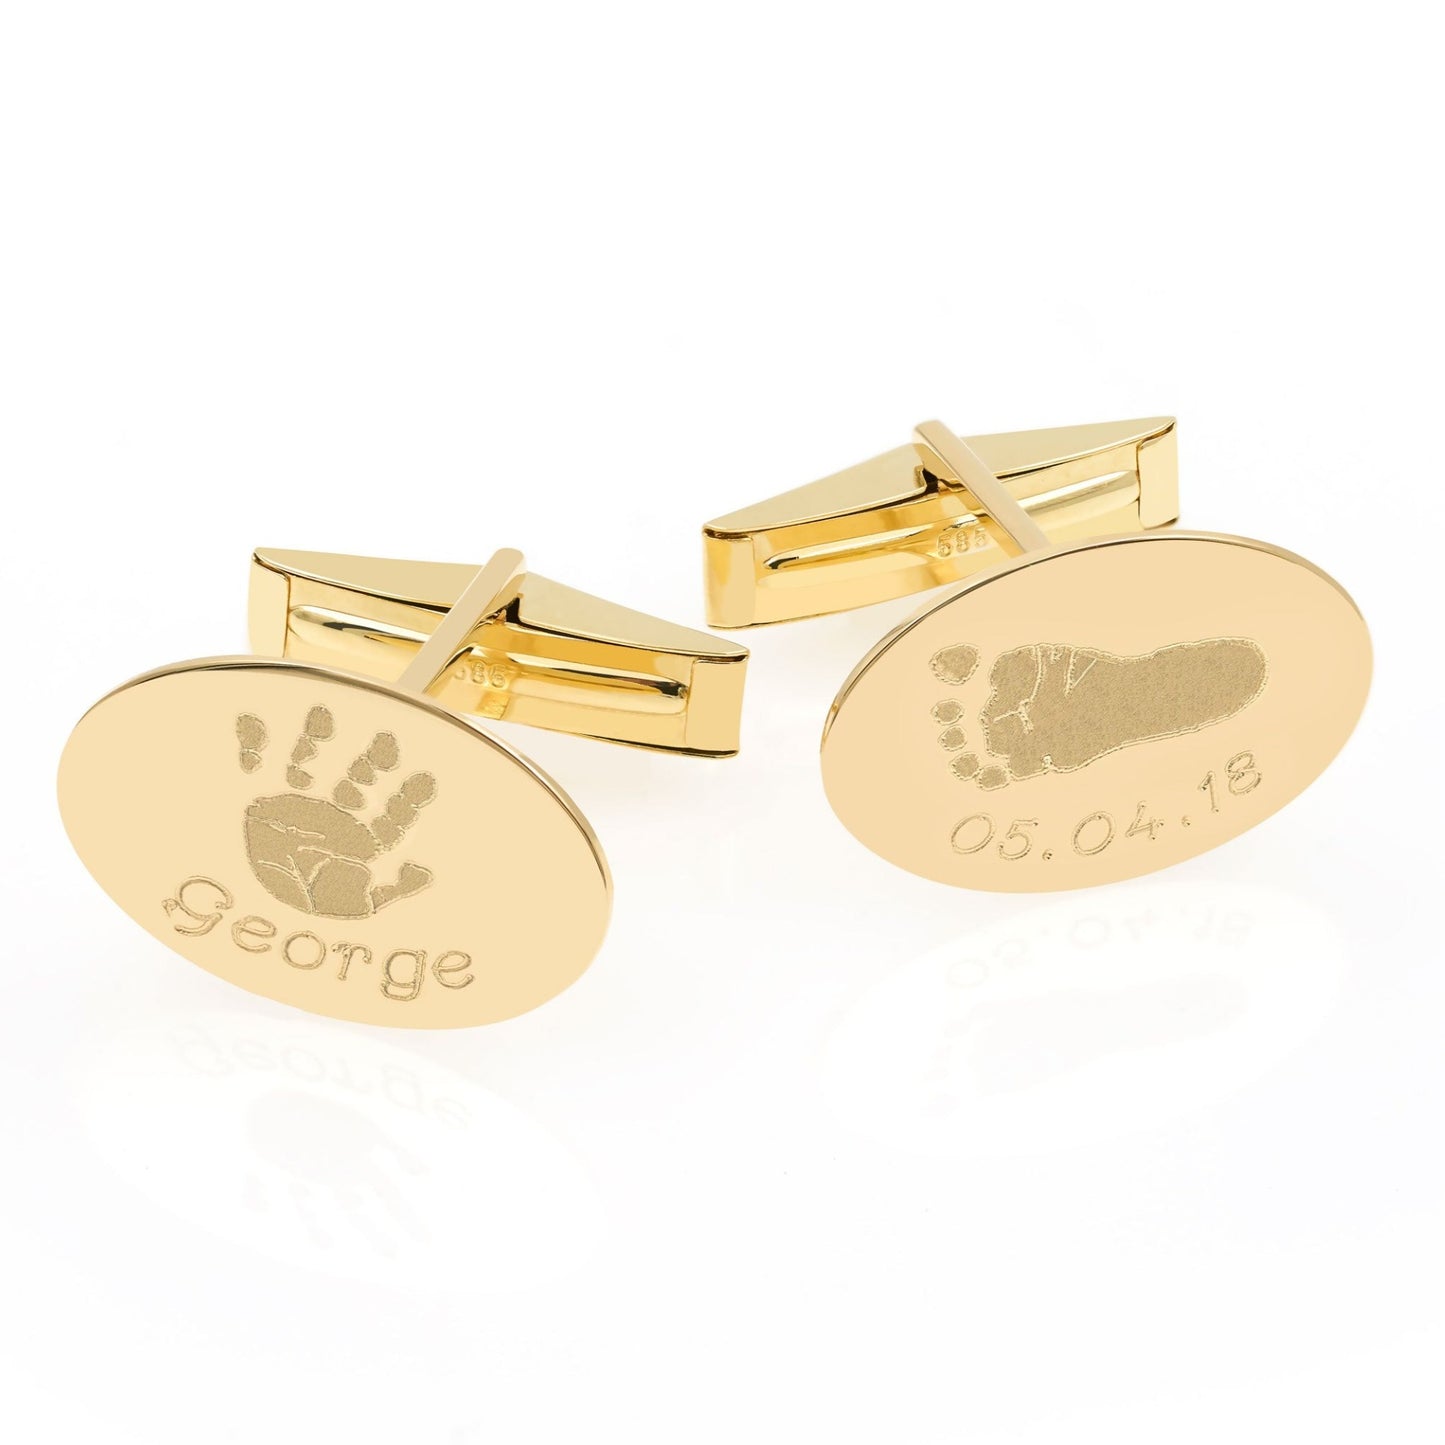 Footprint / Handprint Oval Cufflinks in 14k Gold